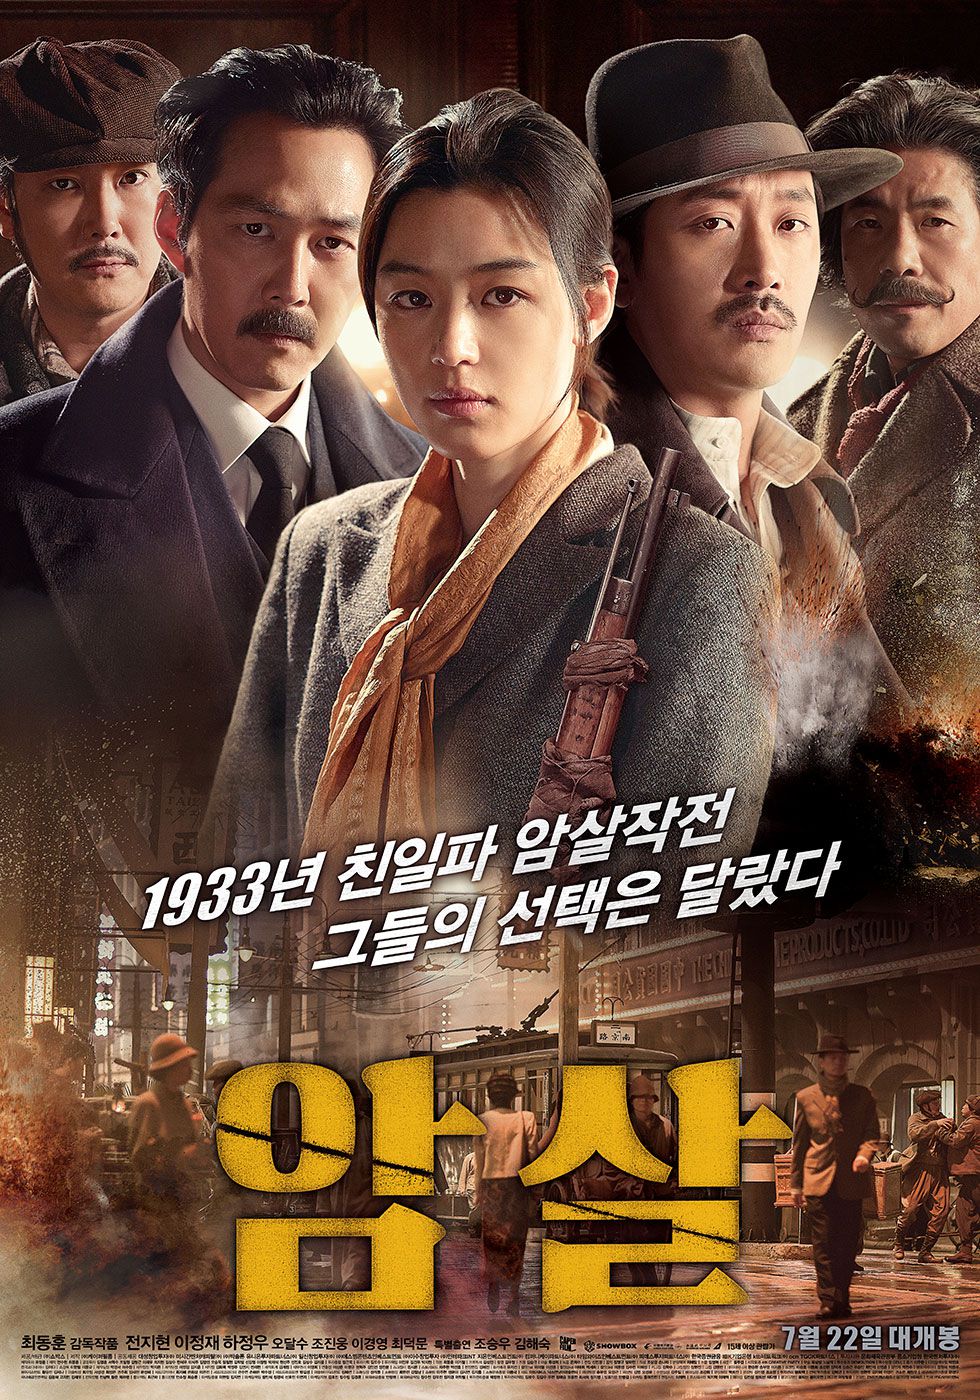 ashley burson recommends korean hot movies list 2015 pic